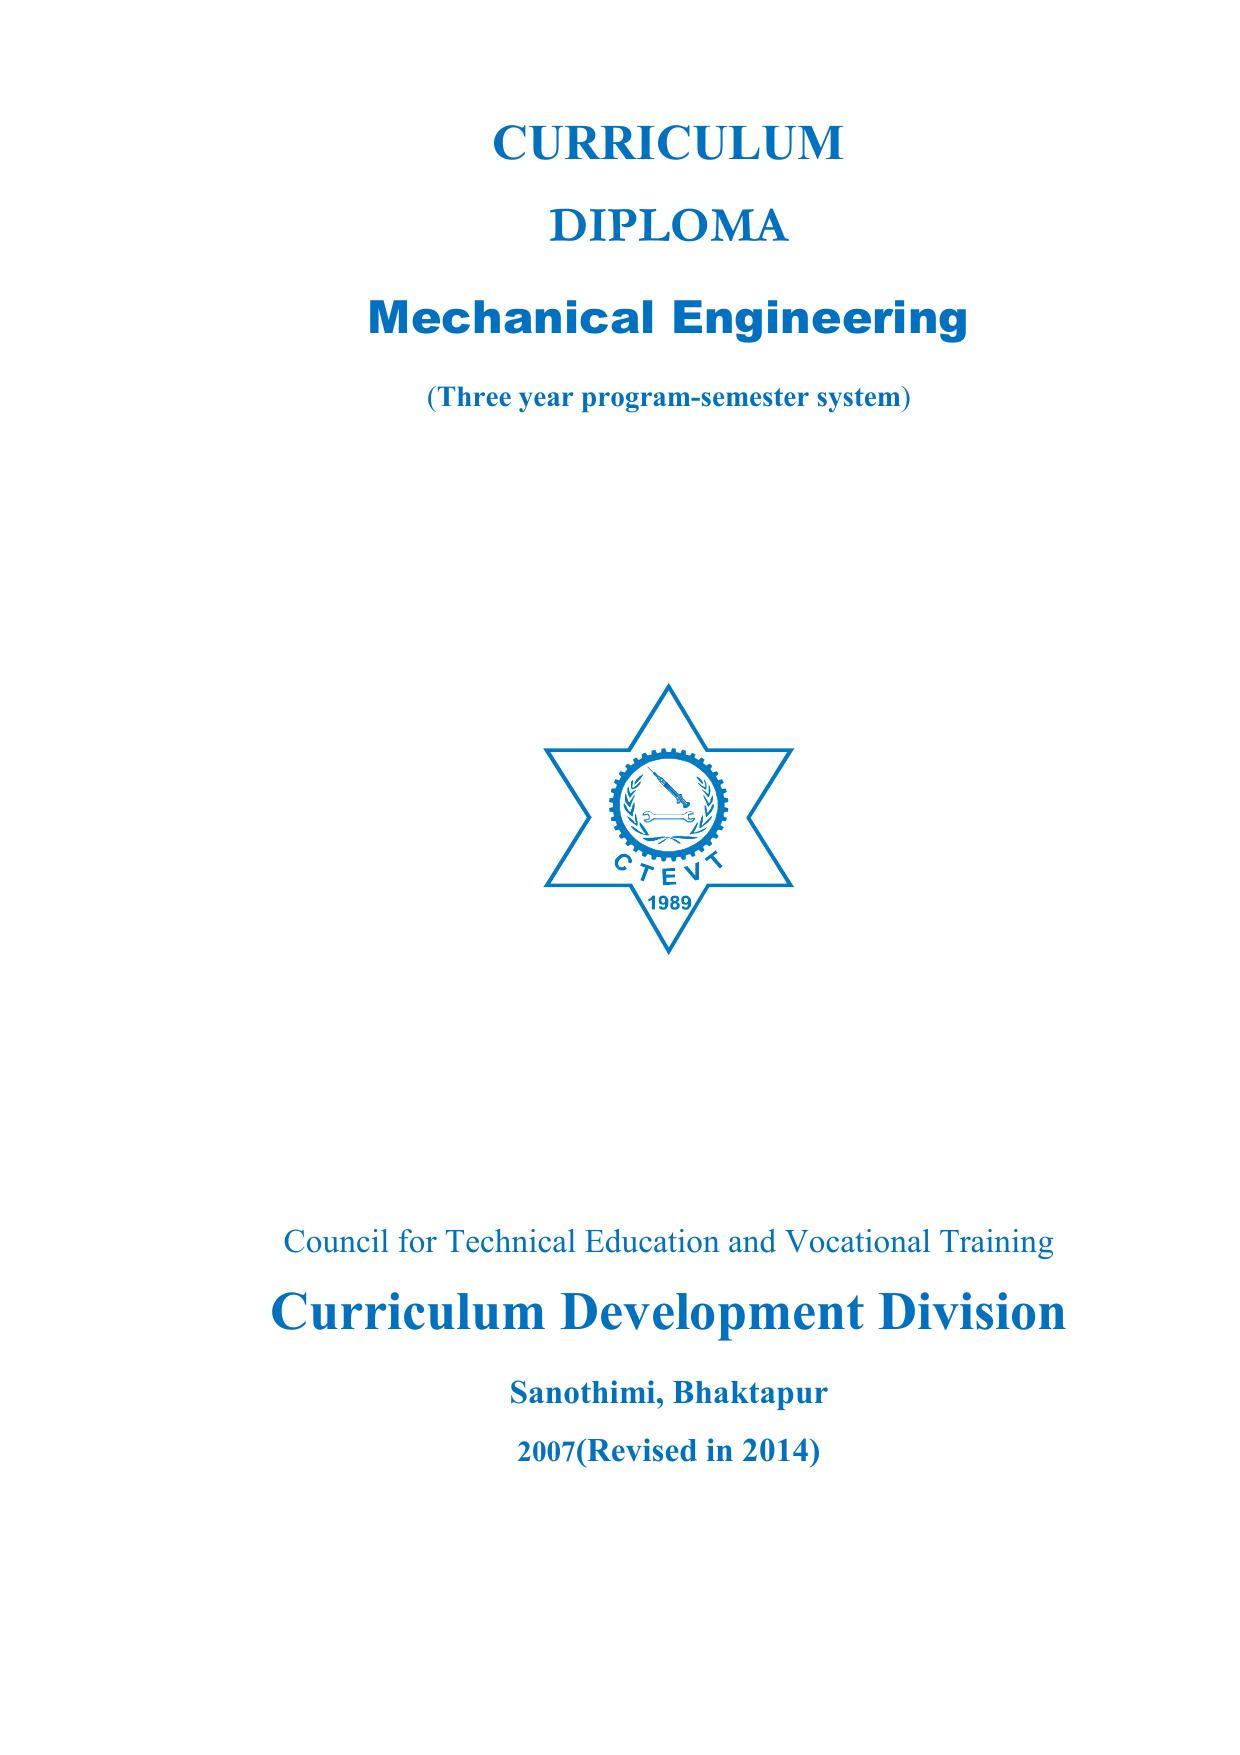 Diploma in Mechanical Engineering, 2014